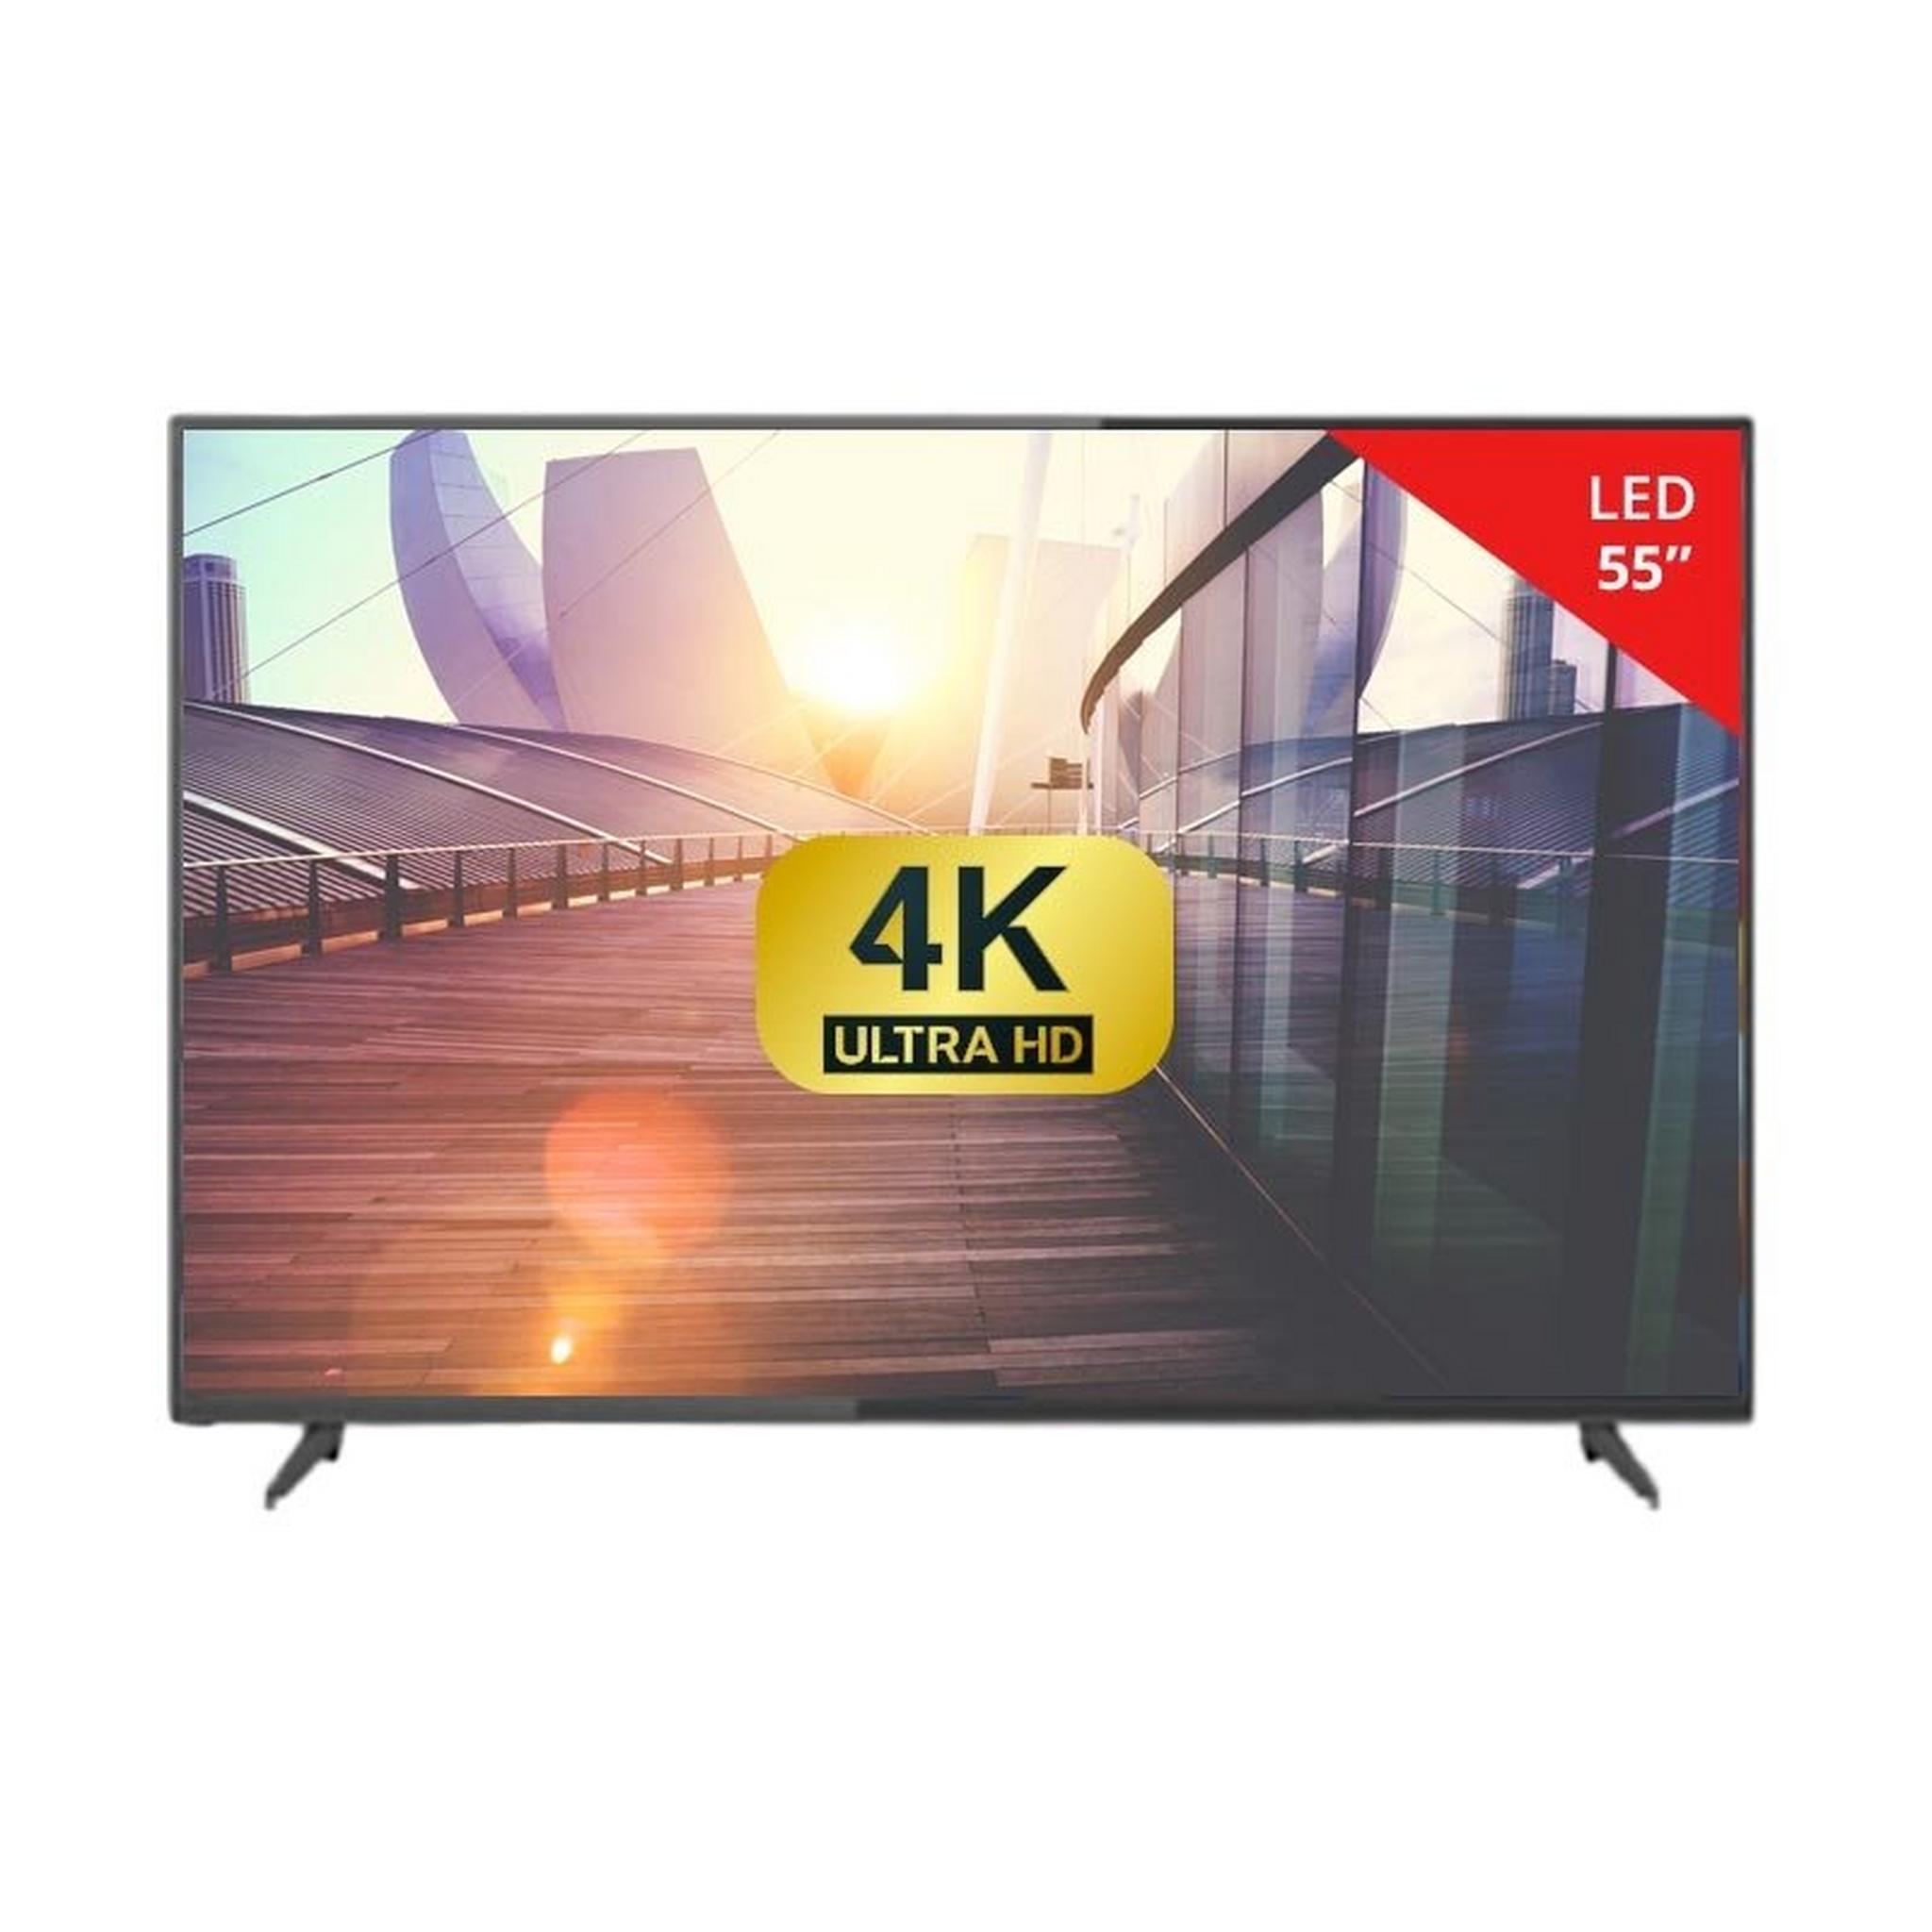 Wansa 55 inch 4K Ultra HD Smart LED TV - WUD55G8862S